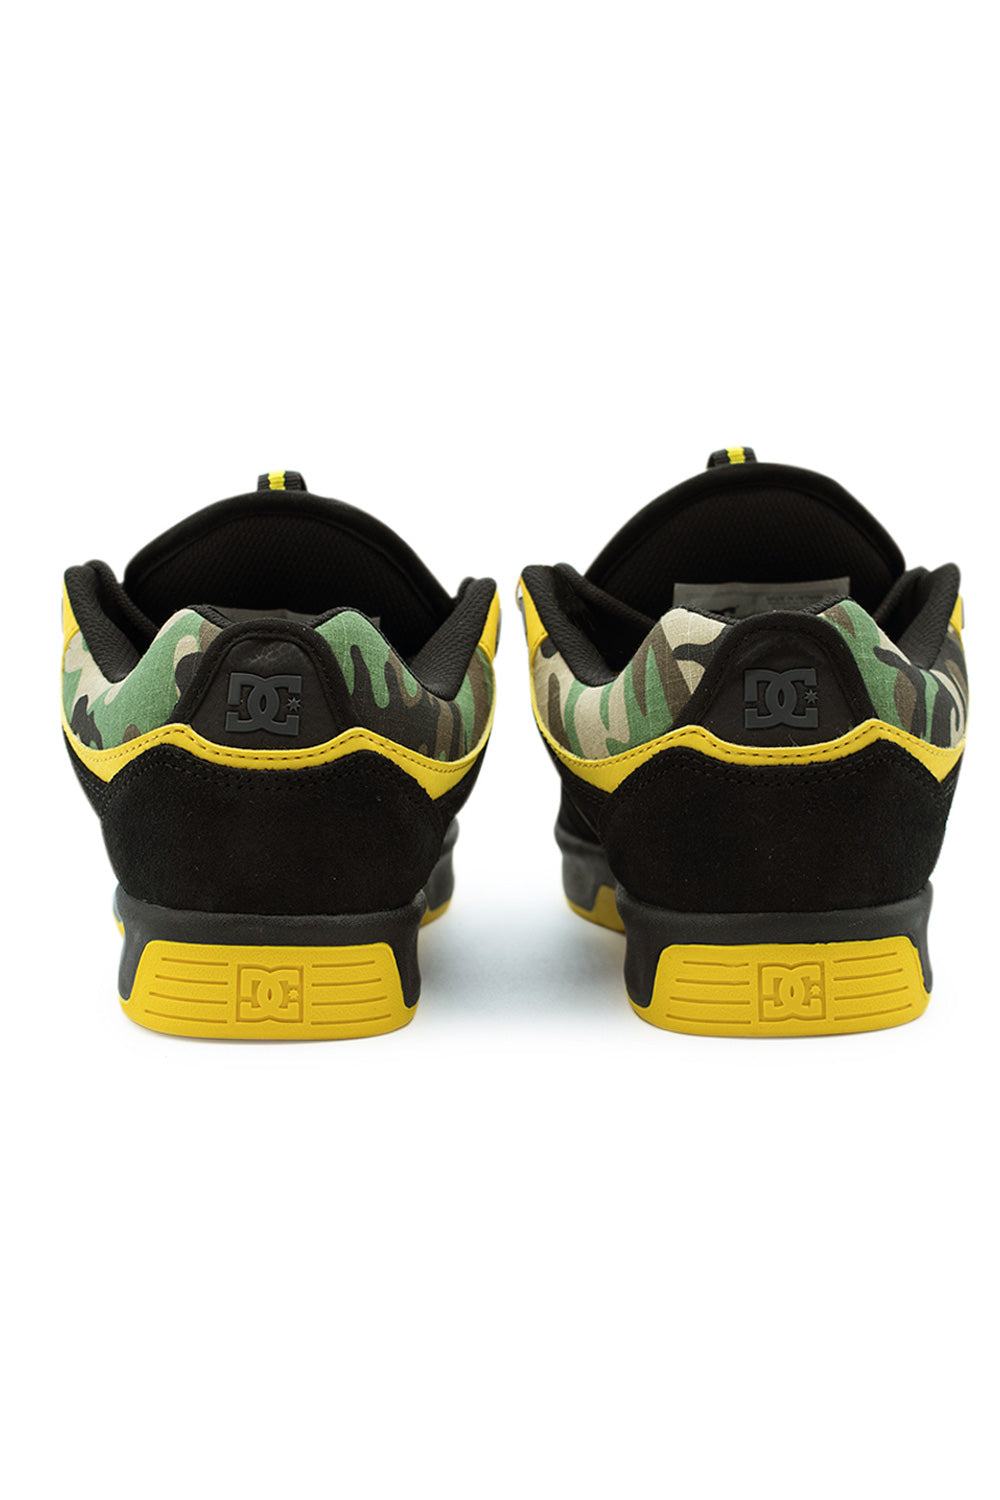 DC Shoes X Thrasher Kalynx Shoe Black / Camo - BONKERS